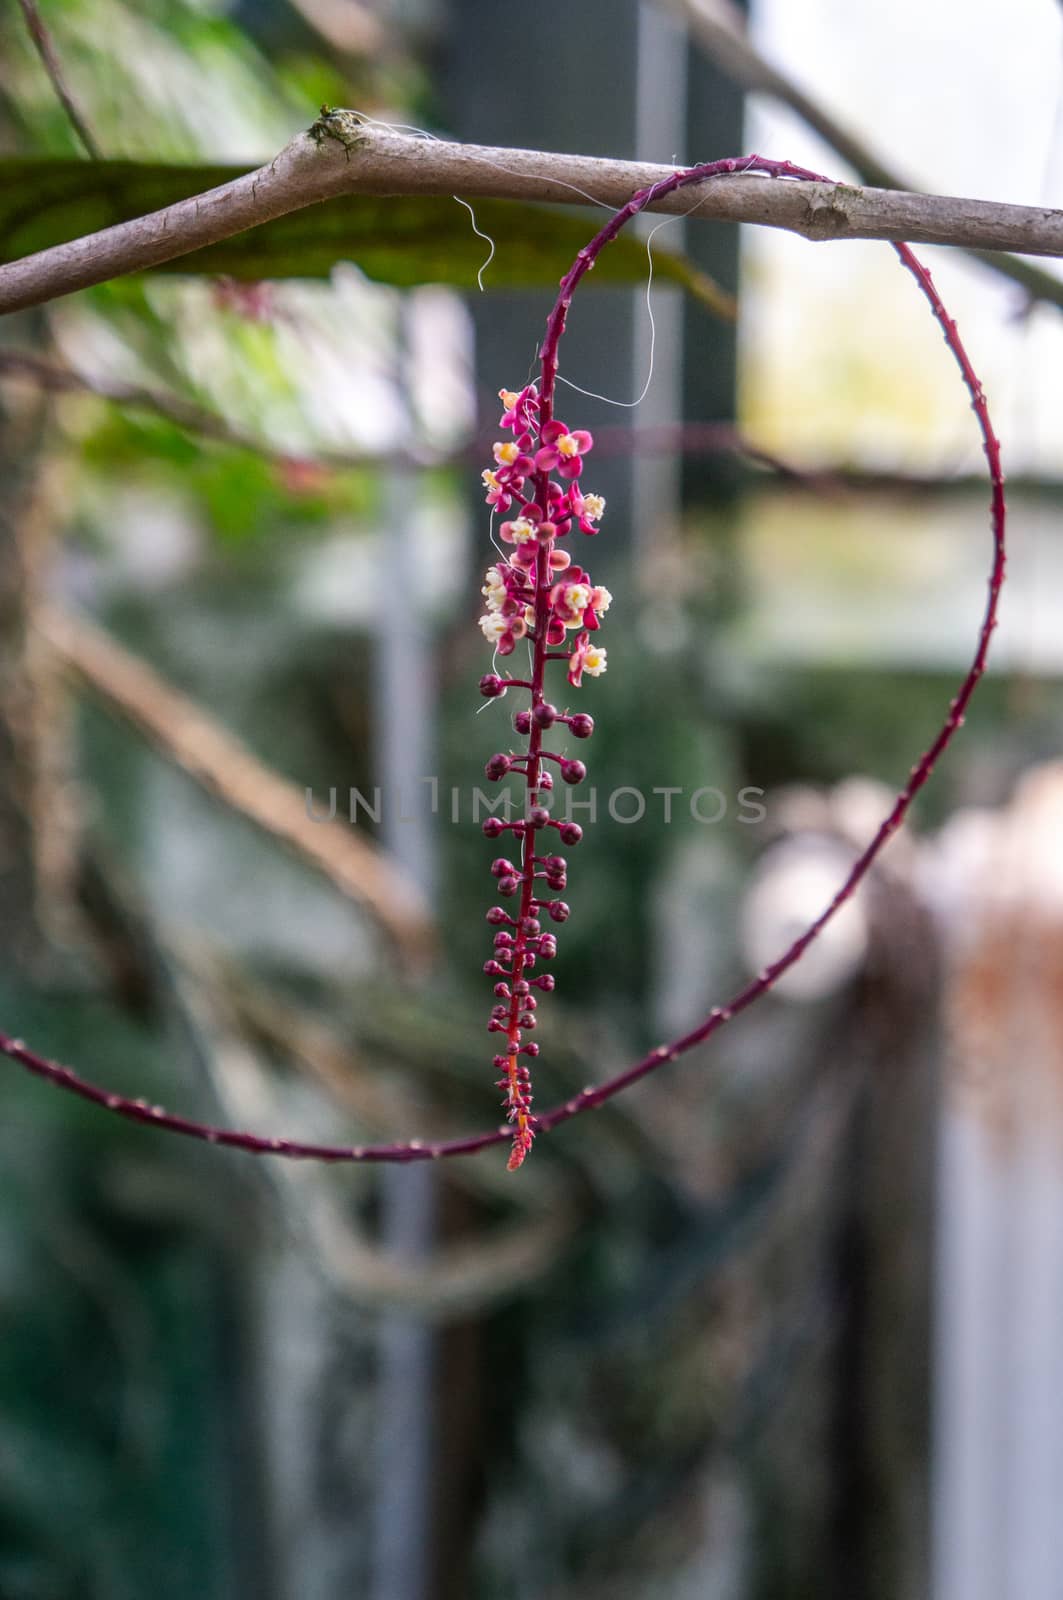 Macro shot of dark pink "Trichostigma peruviana" vine with small flowers by sara_lissaker